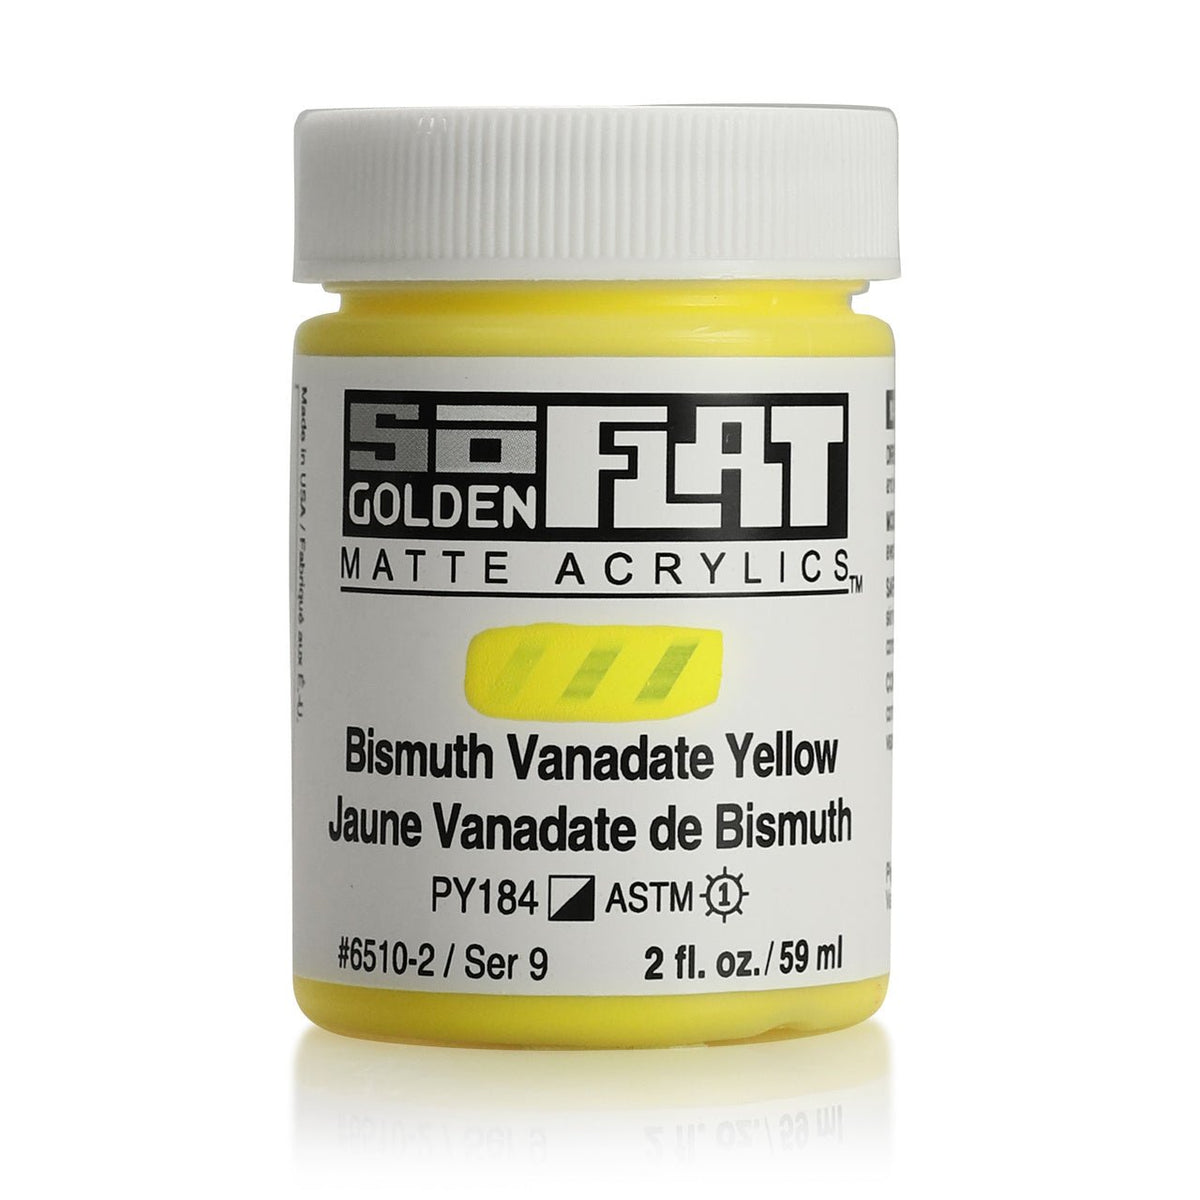 Golden SoFlat Matte Acrylic Paint - Bismuth Vanadat Yellow 2 oz jar - merriartist.com